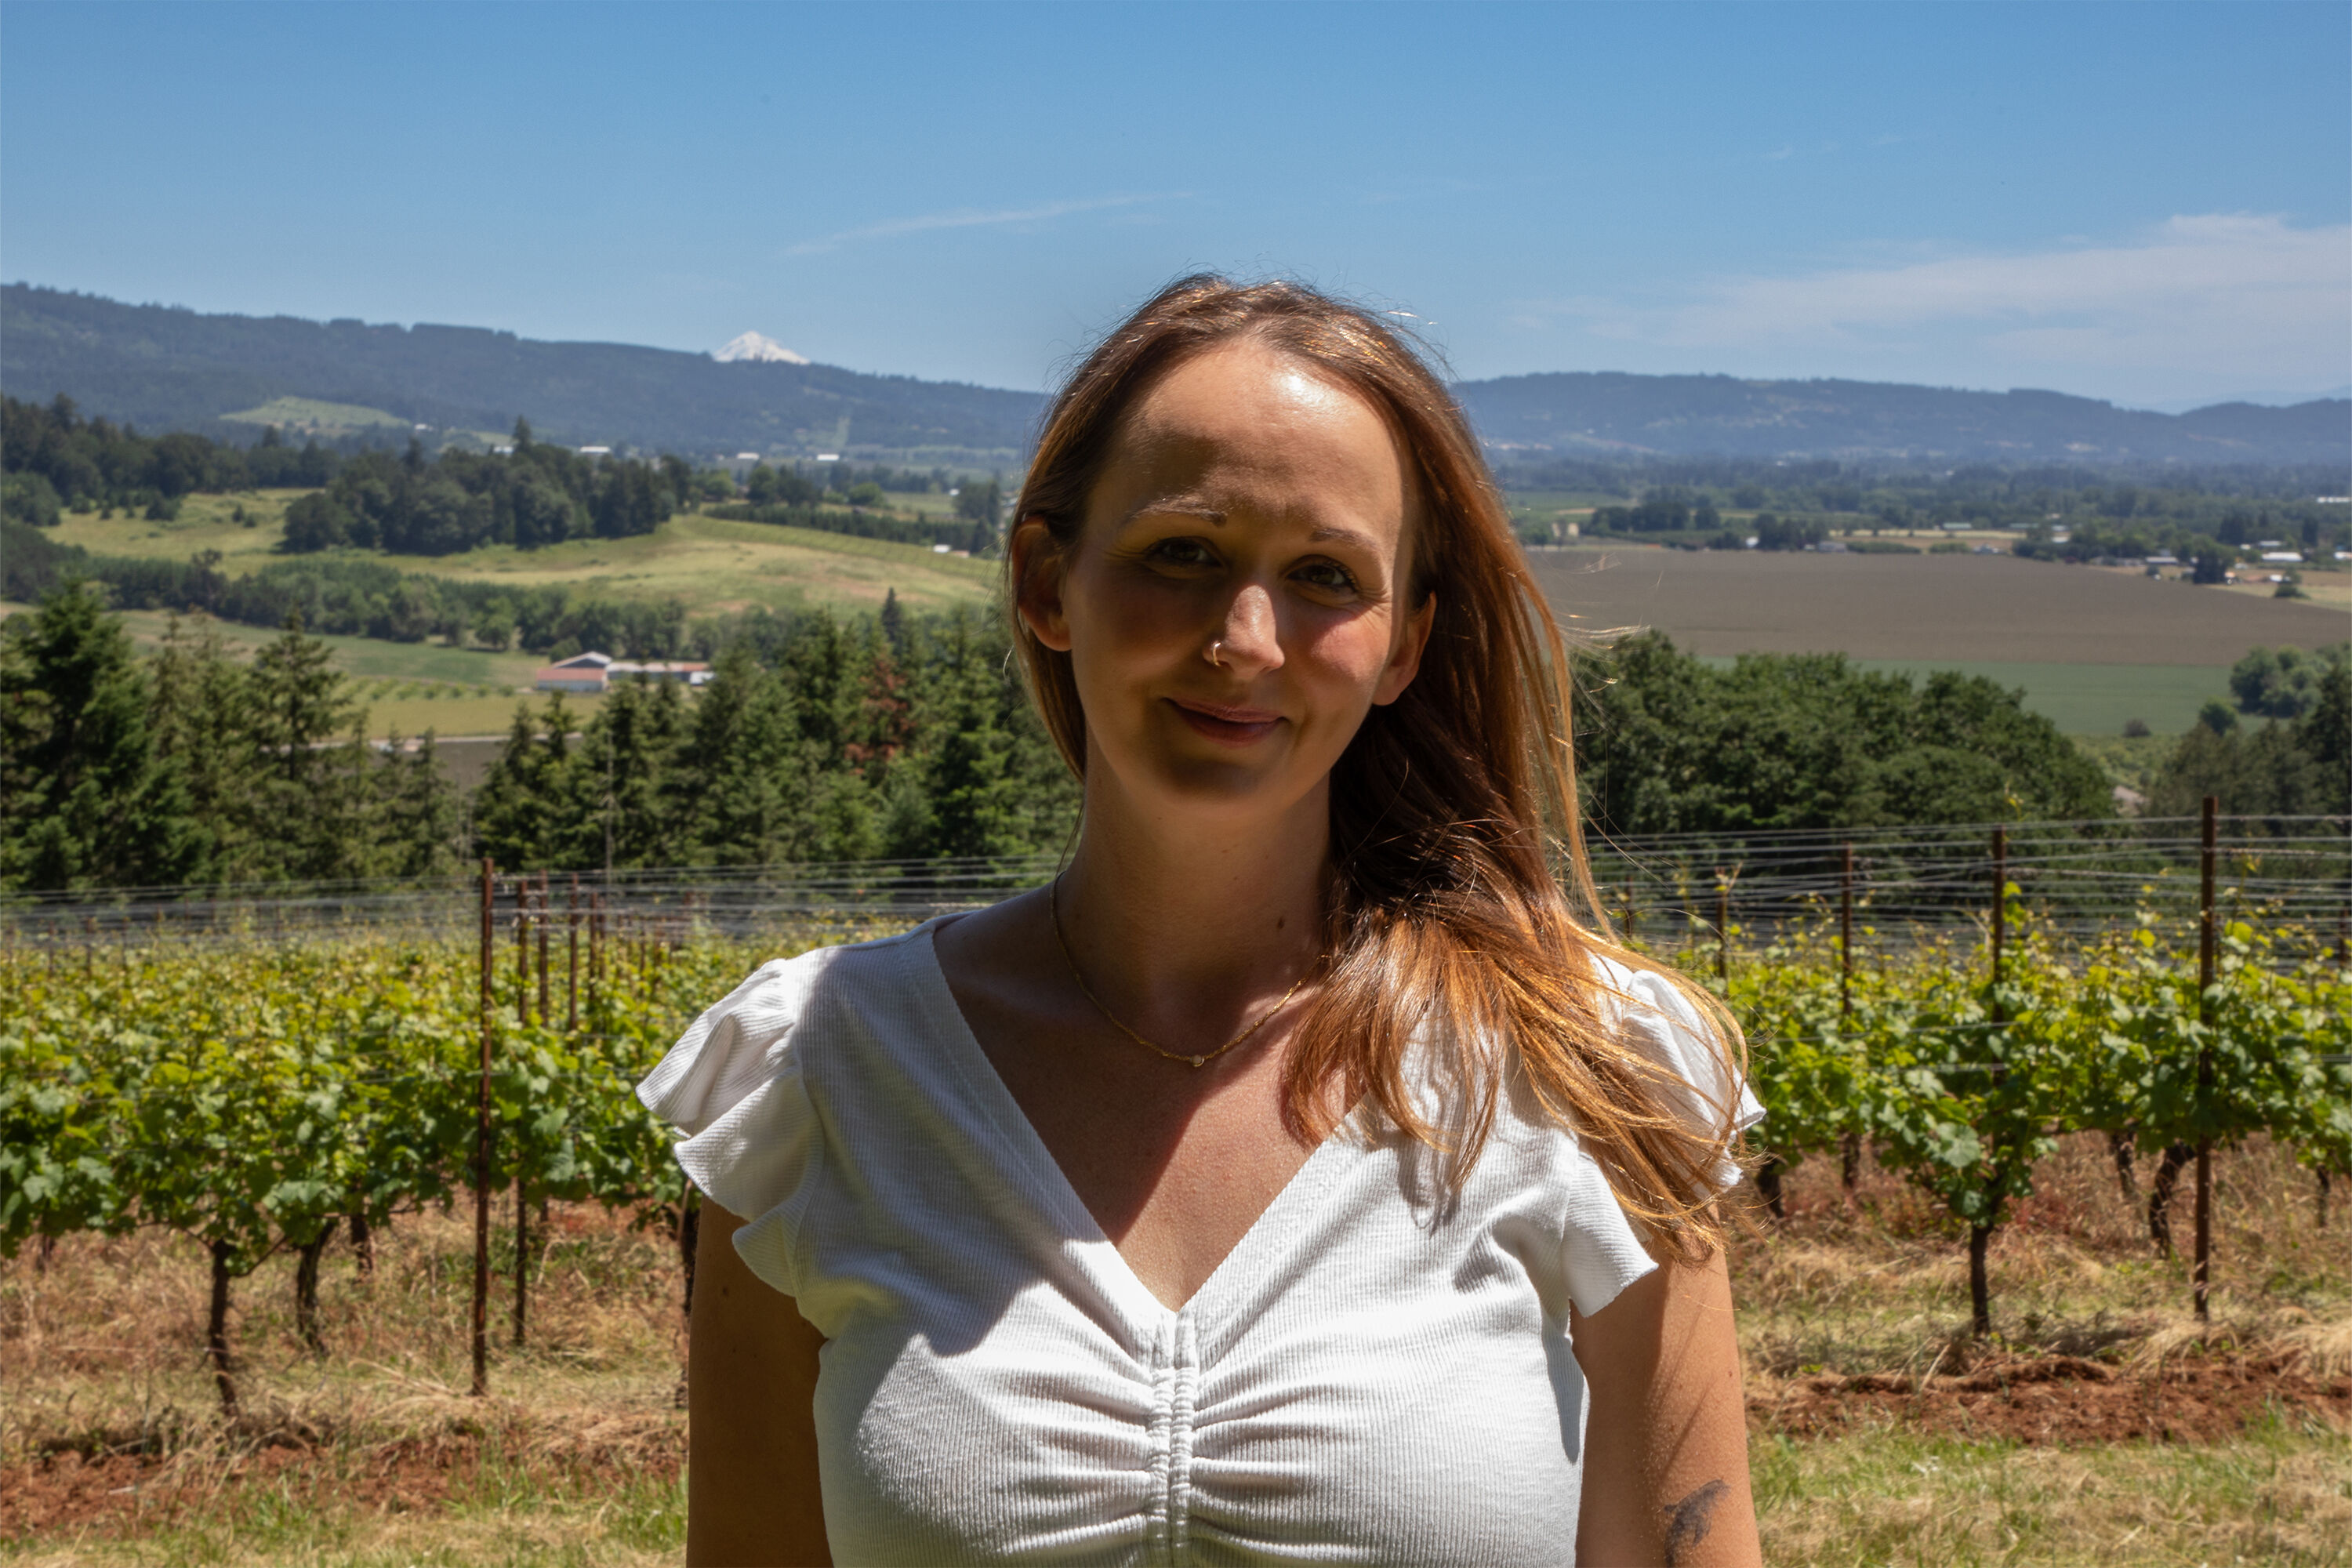 Jessica Burkhart in front of Penner-Ash estate vineyard